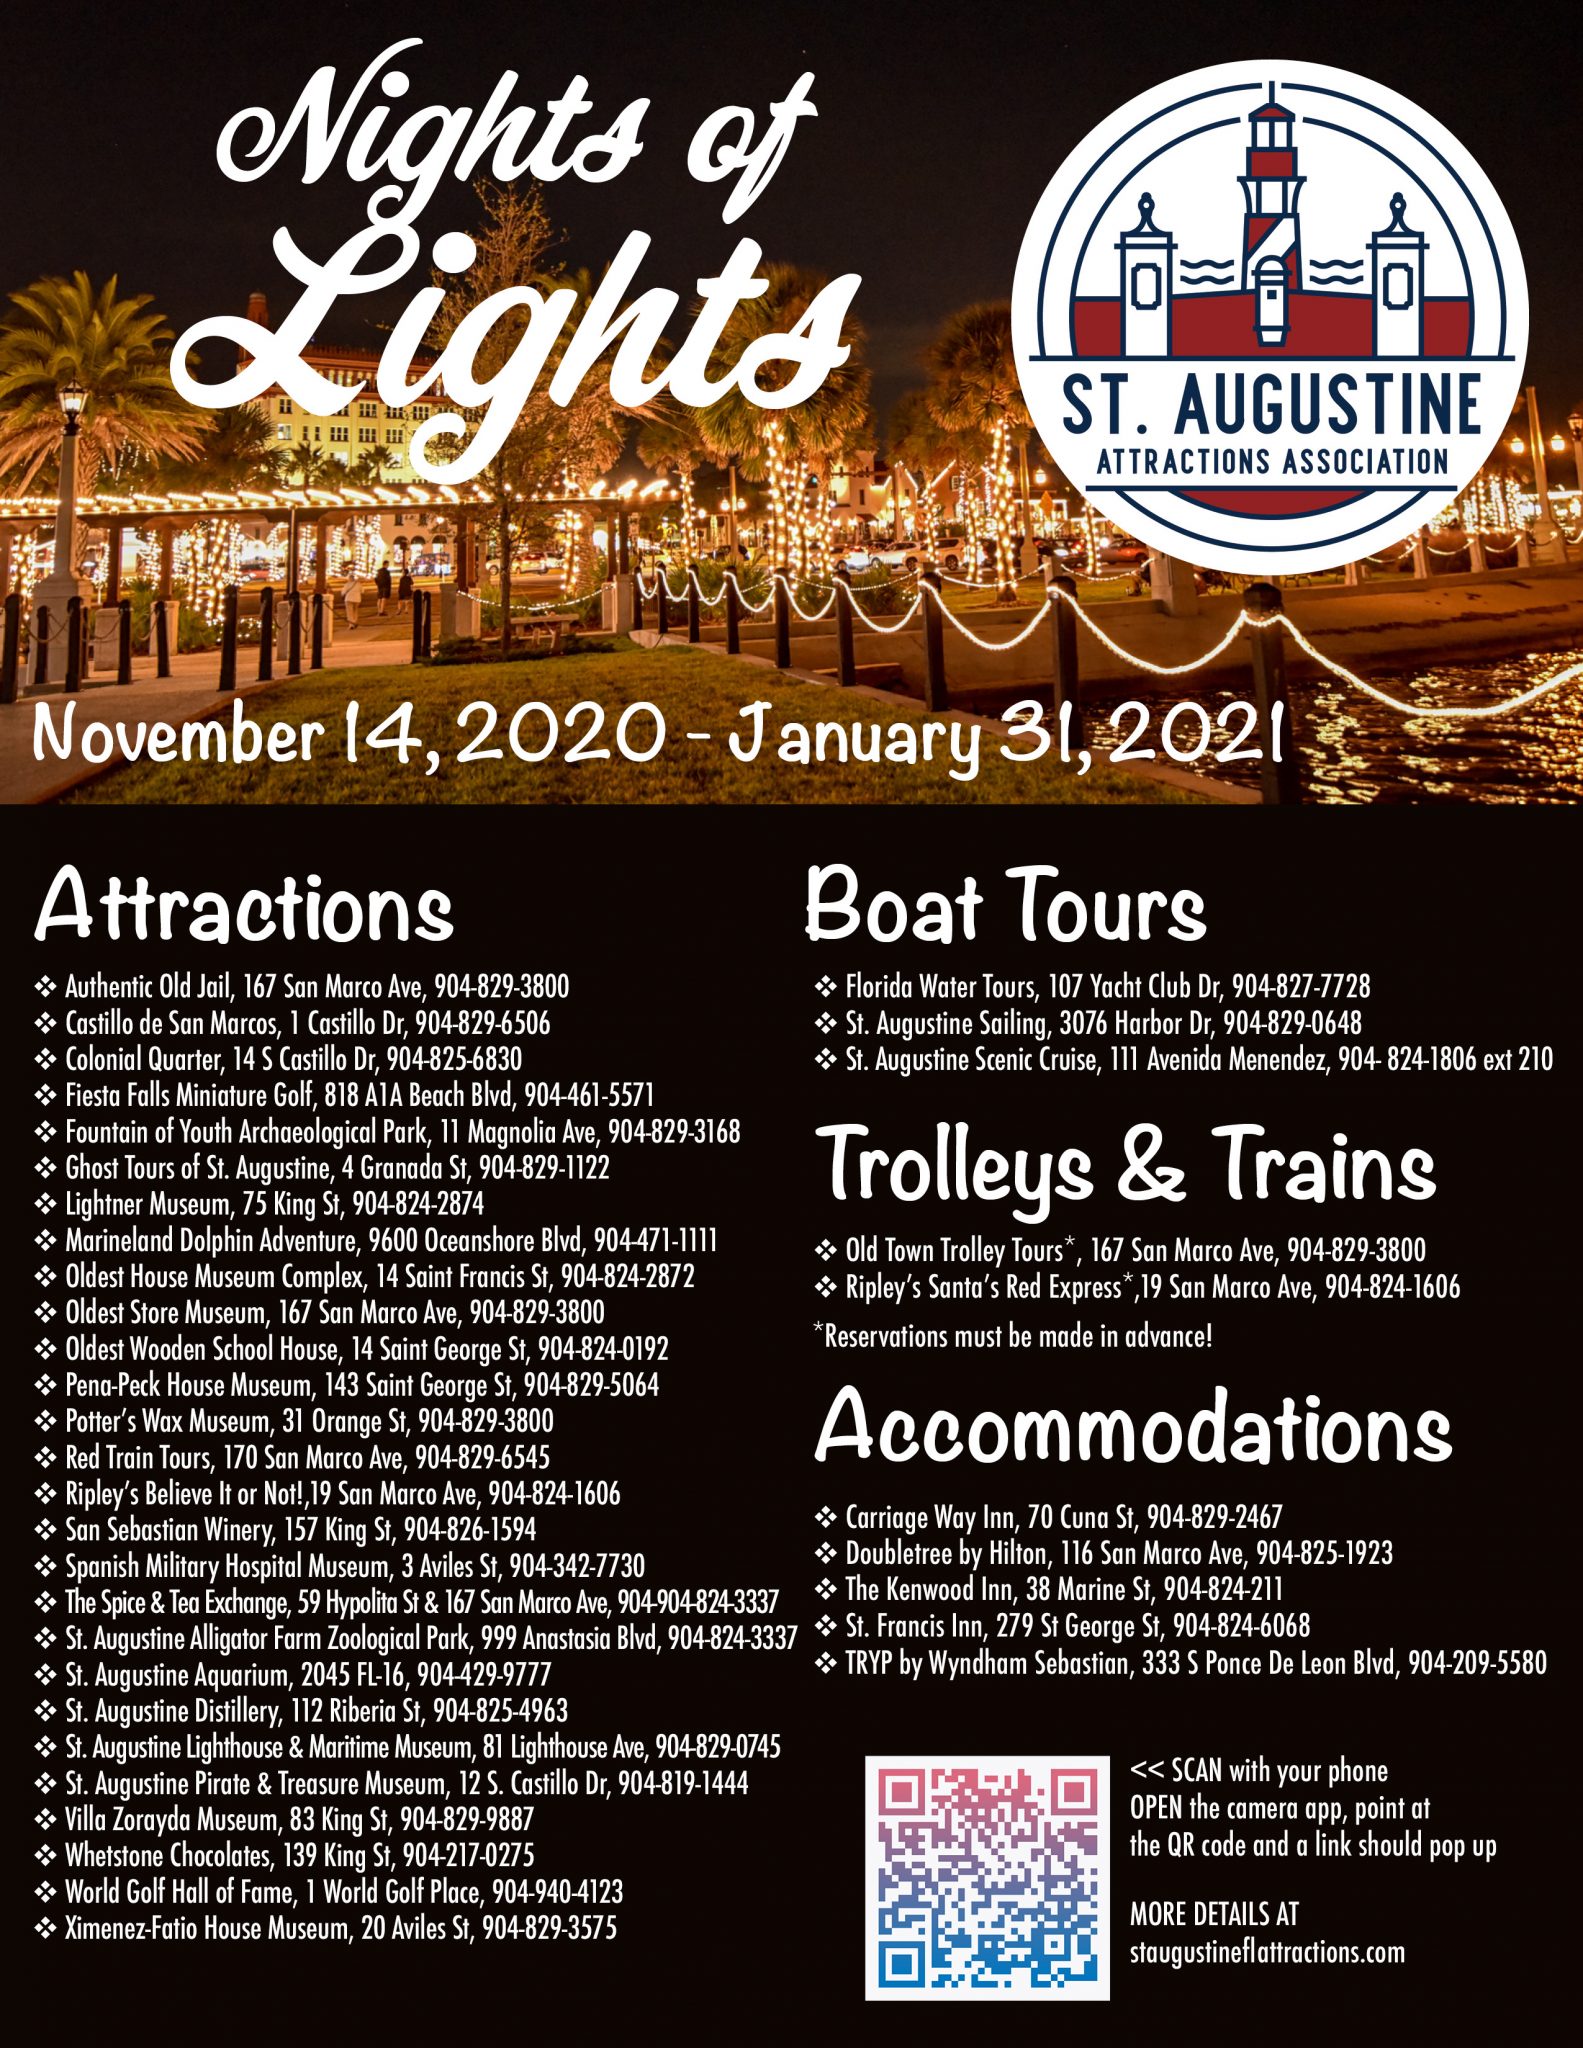 Nov. 14-Jan. 31: St. Augustine Attractions offer Nights of Lights